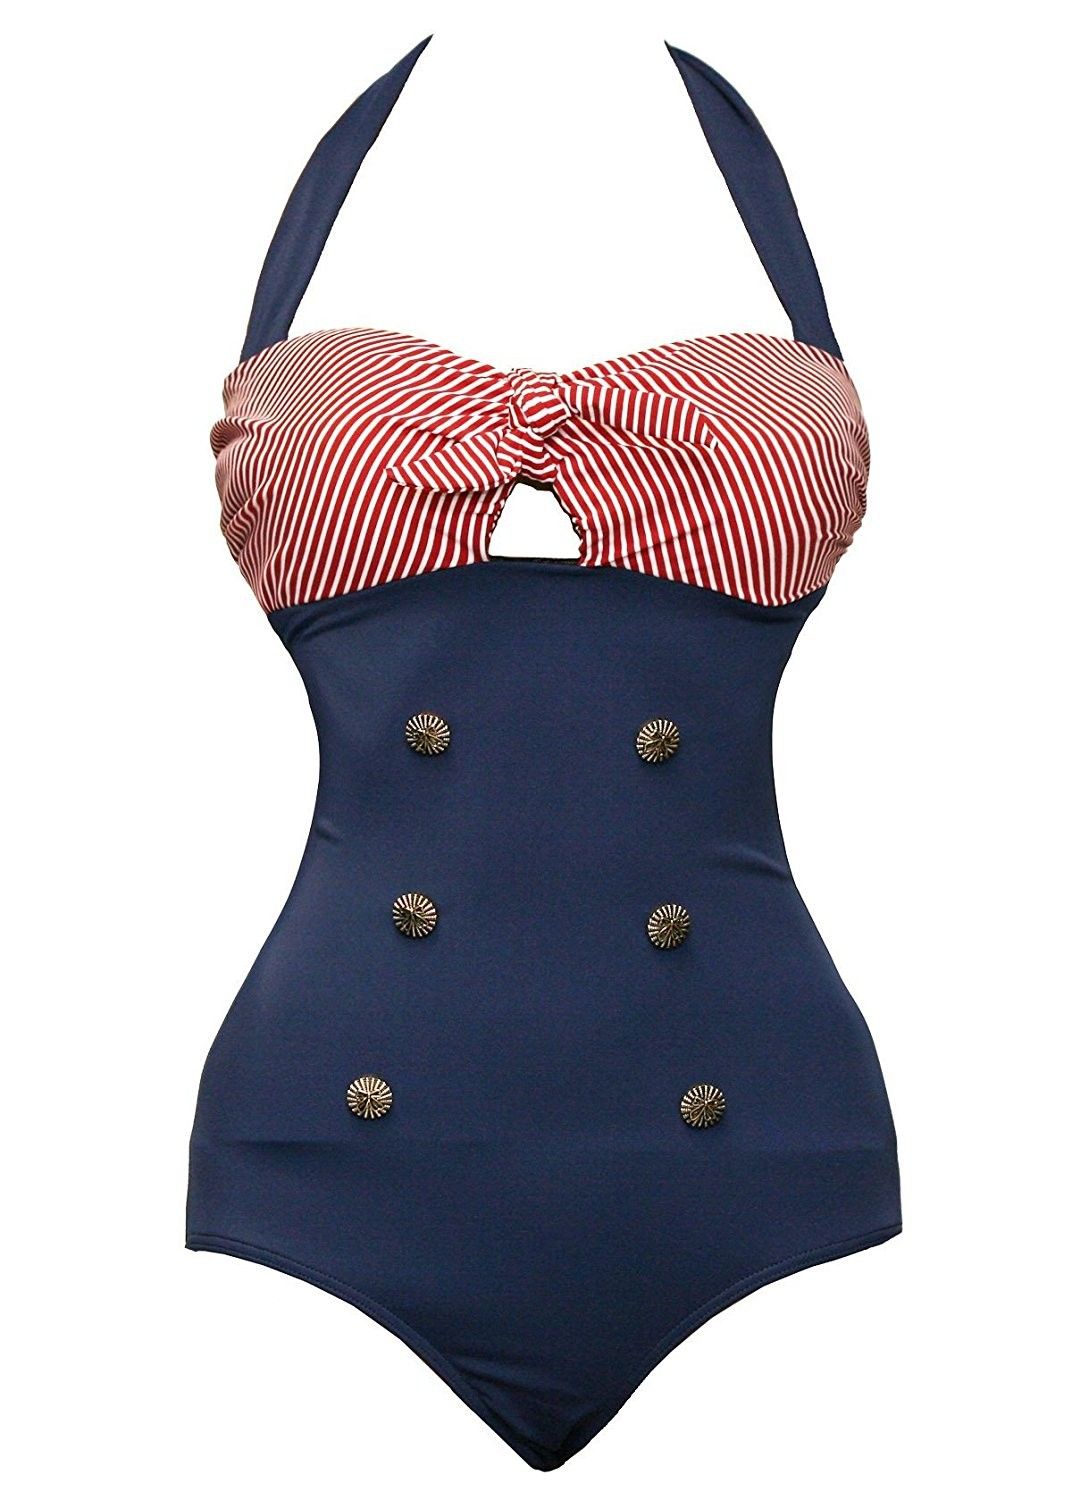 Ladies Retro Vintage Push Up Monokini One Piece Swimsuit Plus Size – Red Blue Co…